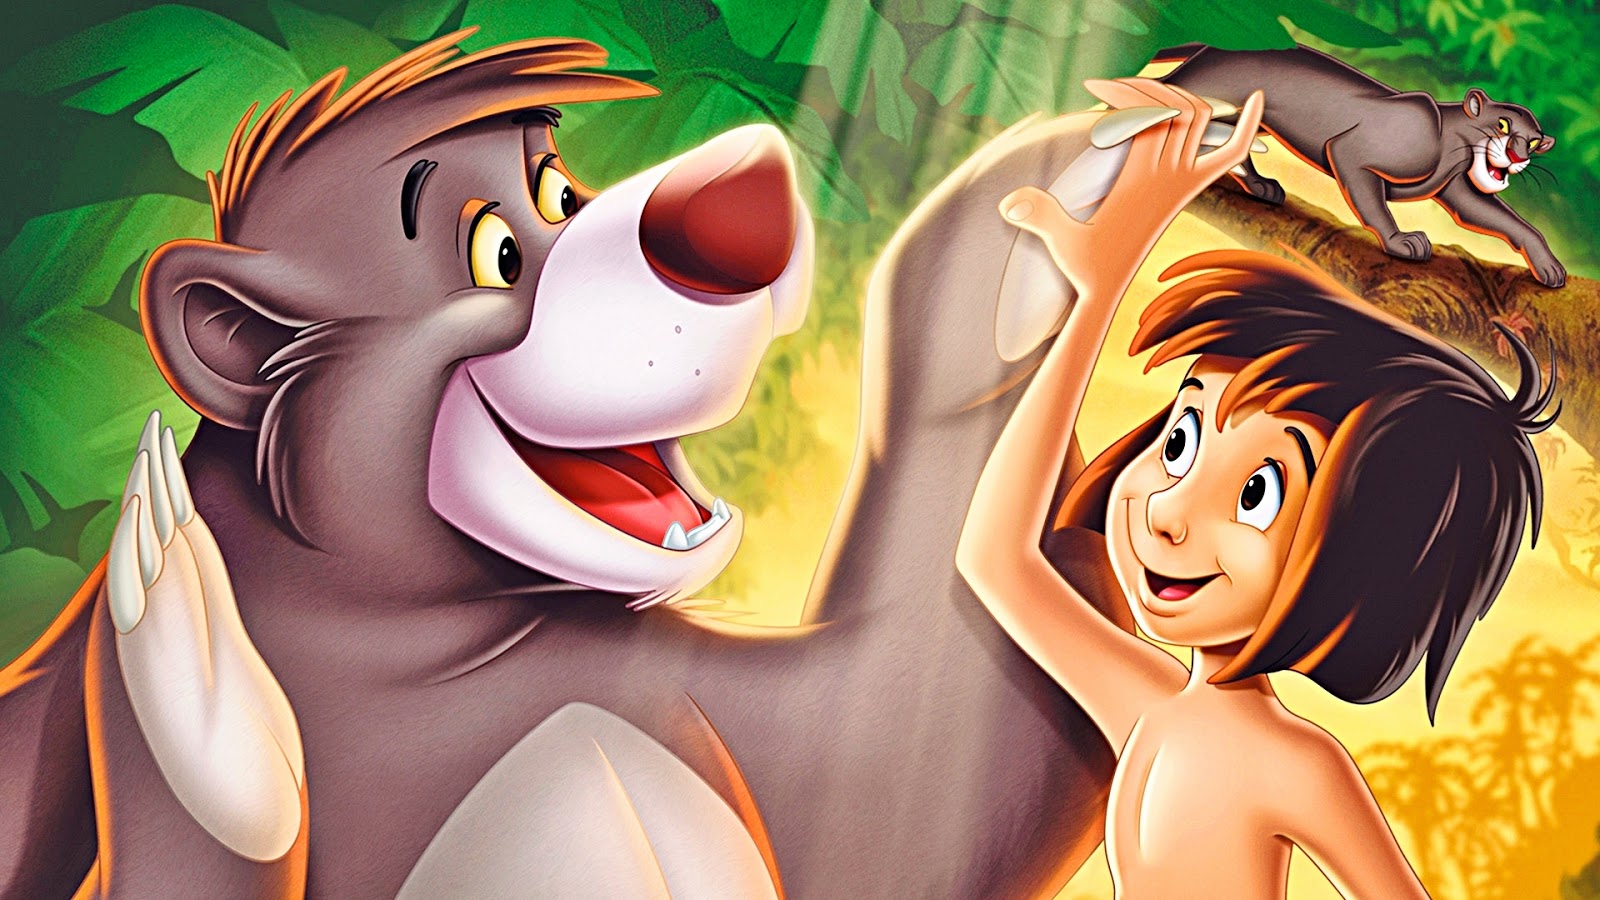 MOVIES: Disney's Jungle Book adds Bill Murray